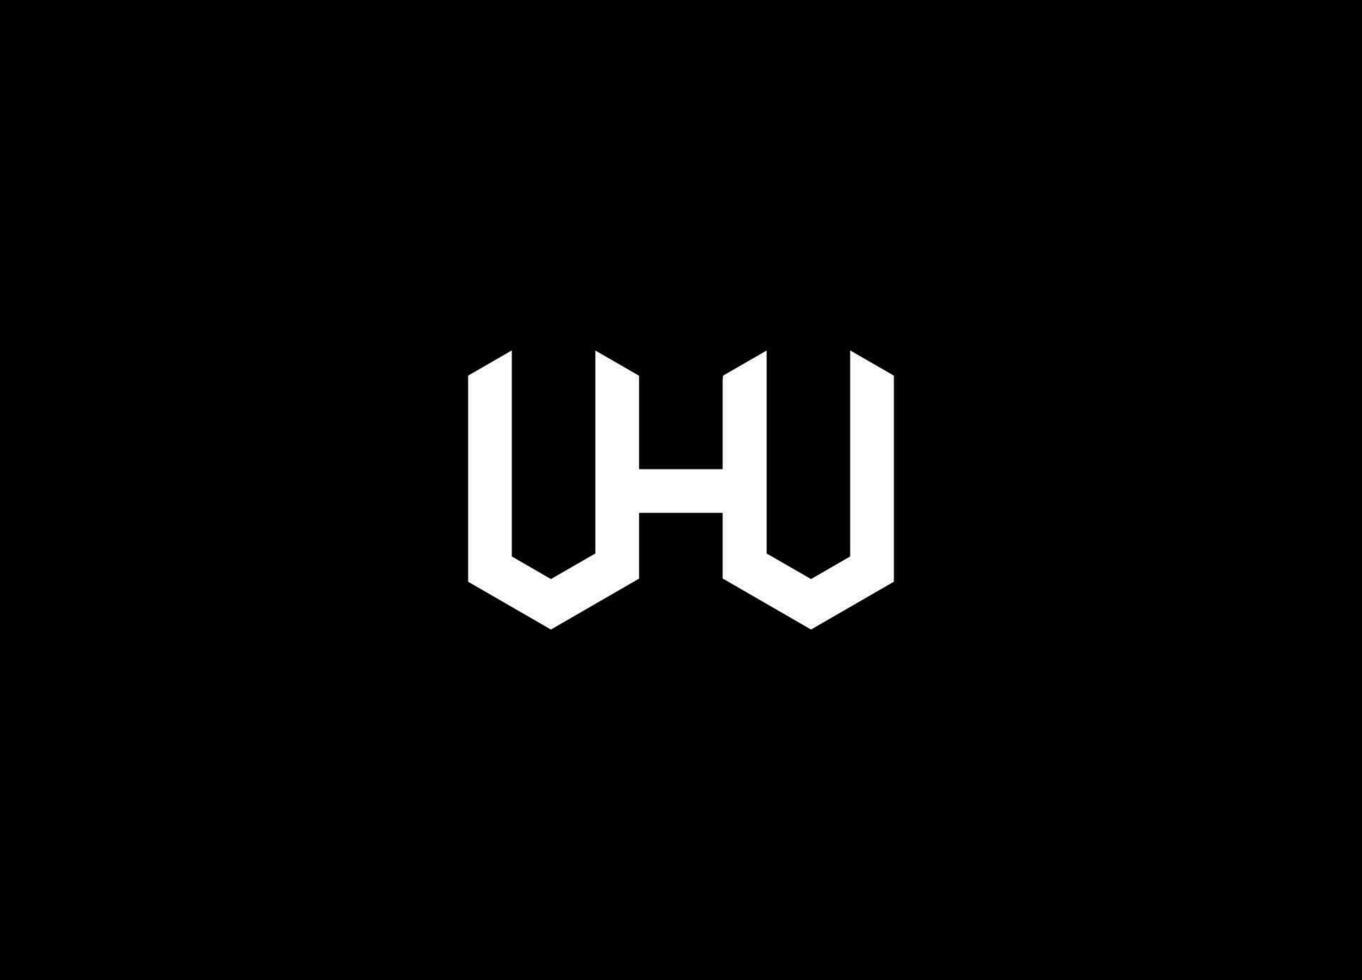 Letter UHU creative logo design vector. UHU letter design for logo and icon. UHU monogram logo.vector illustration with black background. vector